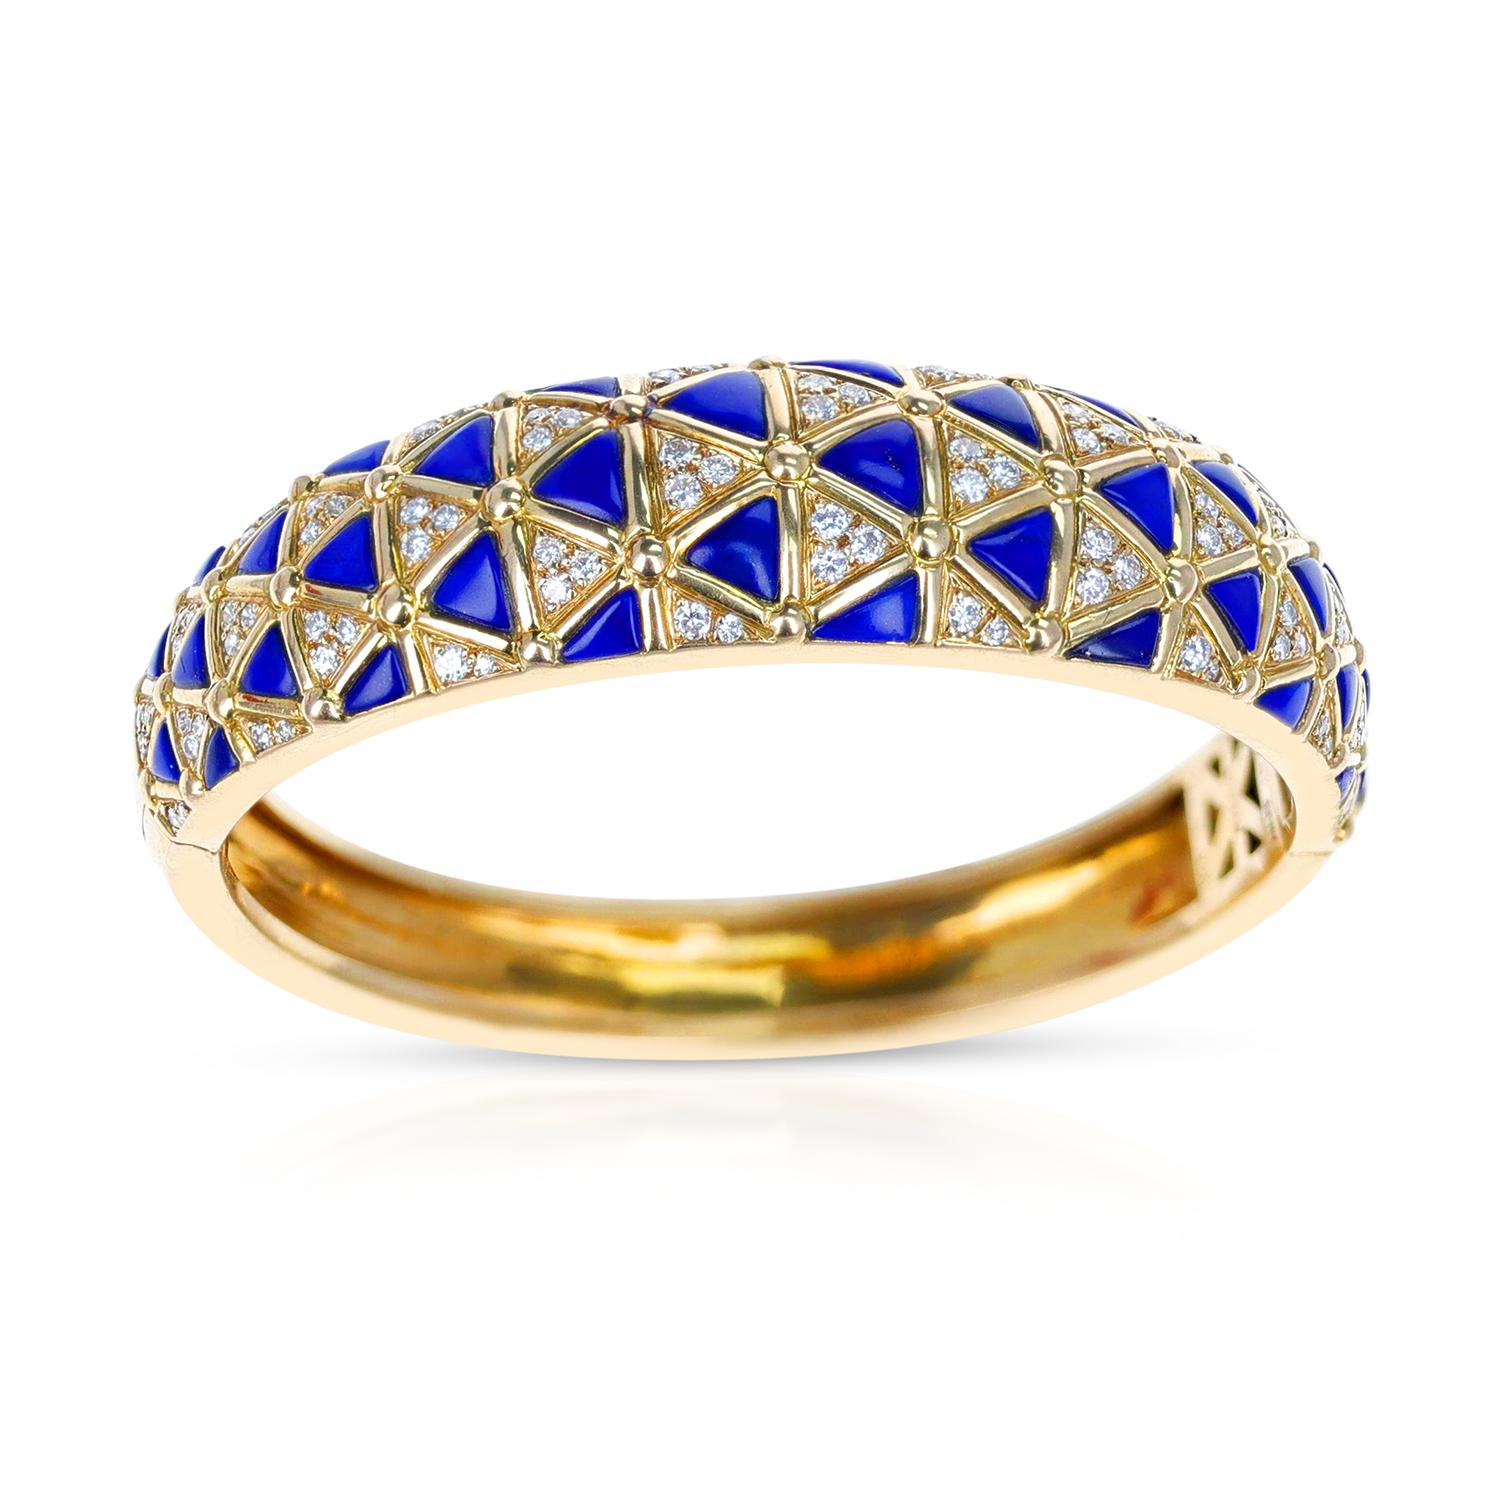 Van Cleef & Arpels French Lapis Lazuli & Diamond Necklace, Earring, Ring, Bangle 14